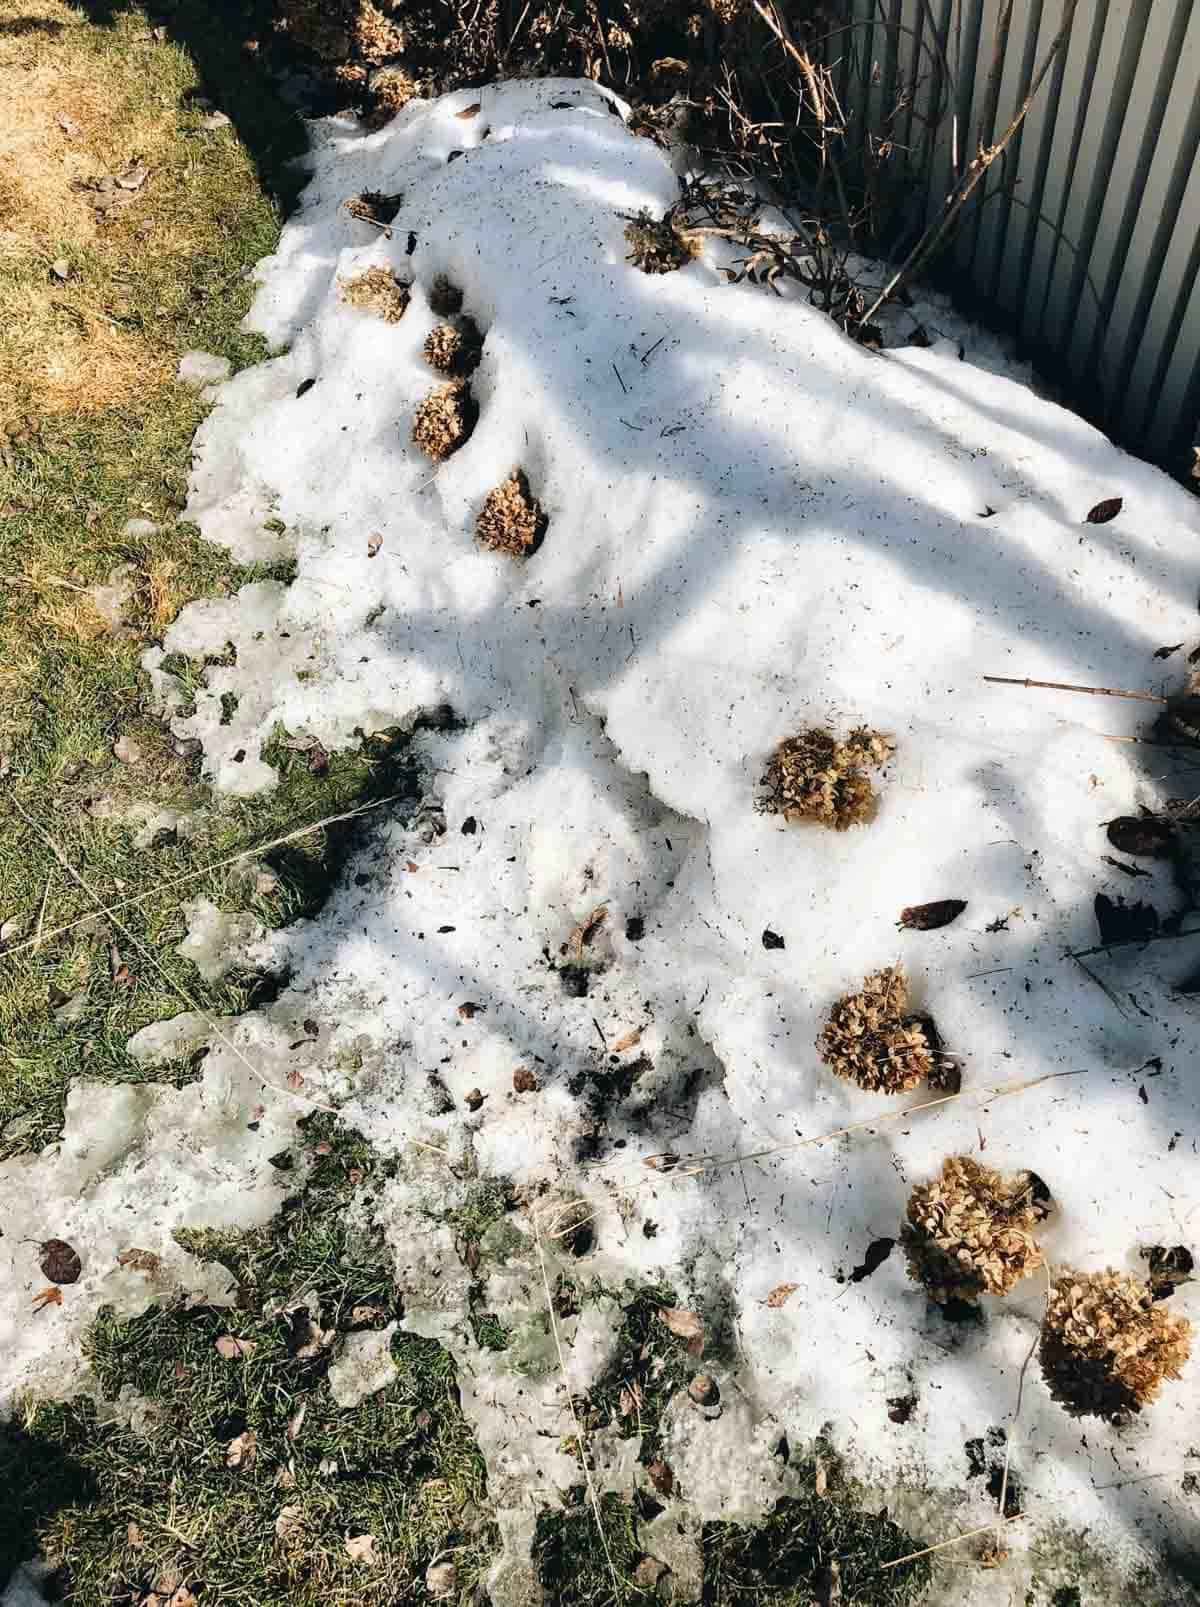 Spring snow on the ground.